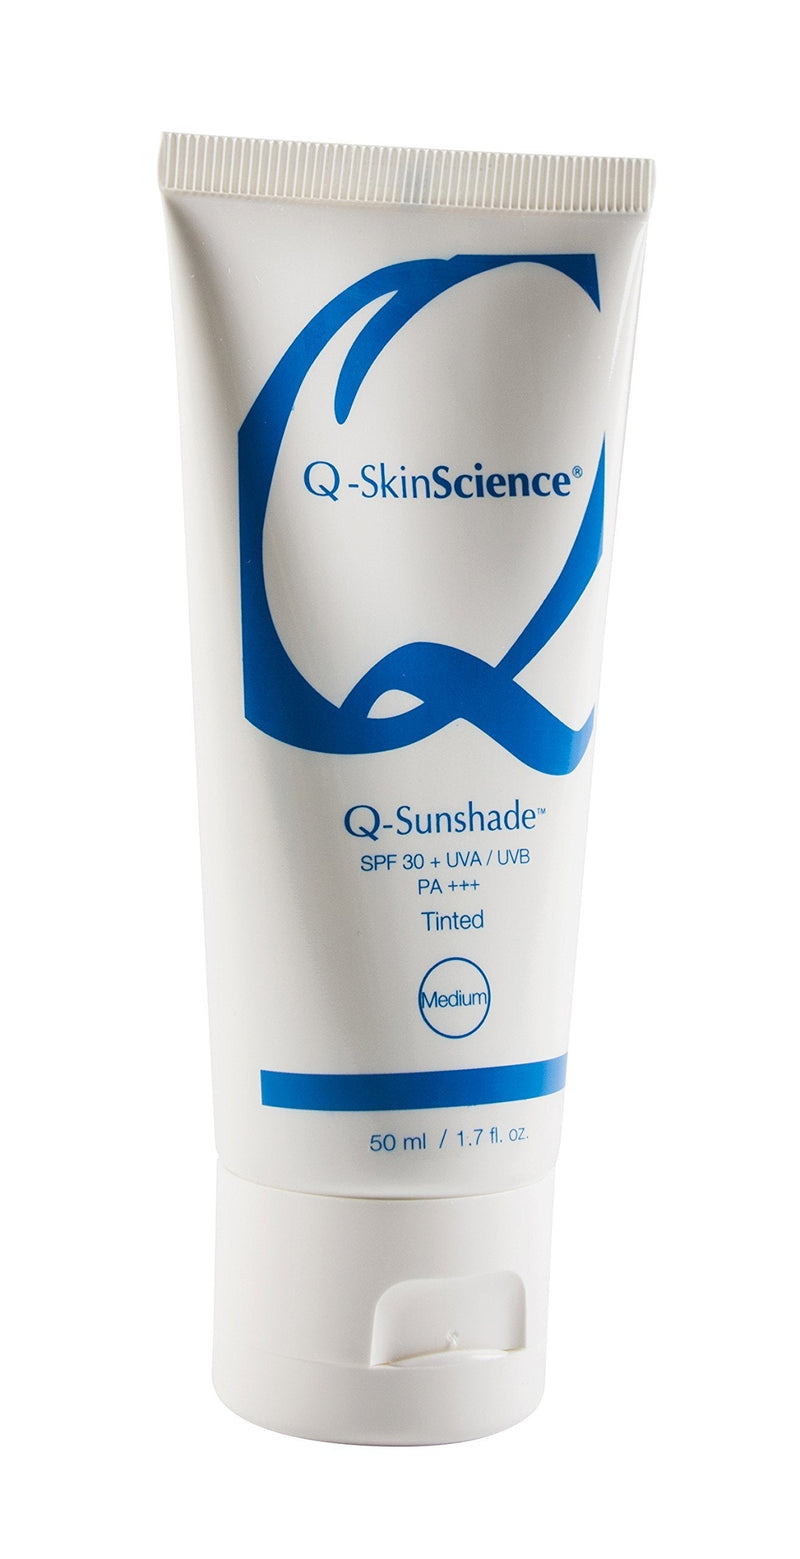 [Australia] - Q-Sunshade SPF 30+ Medium Tinted Sunscreen 